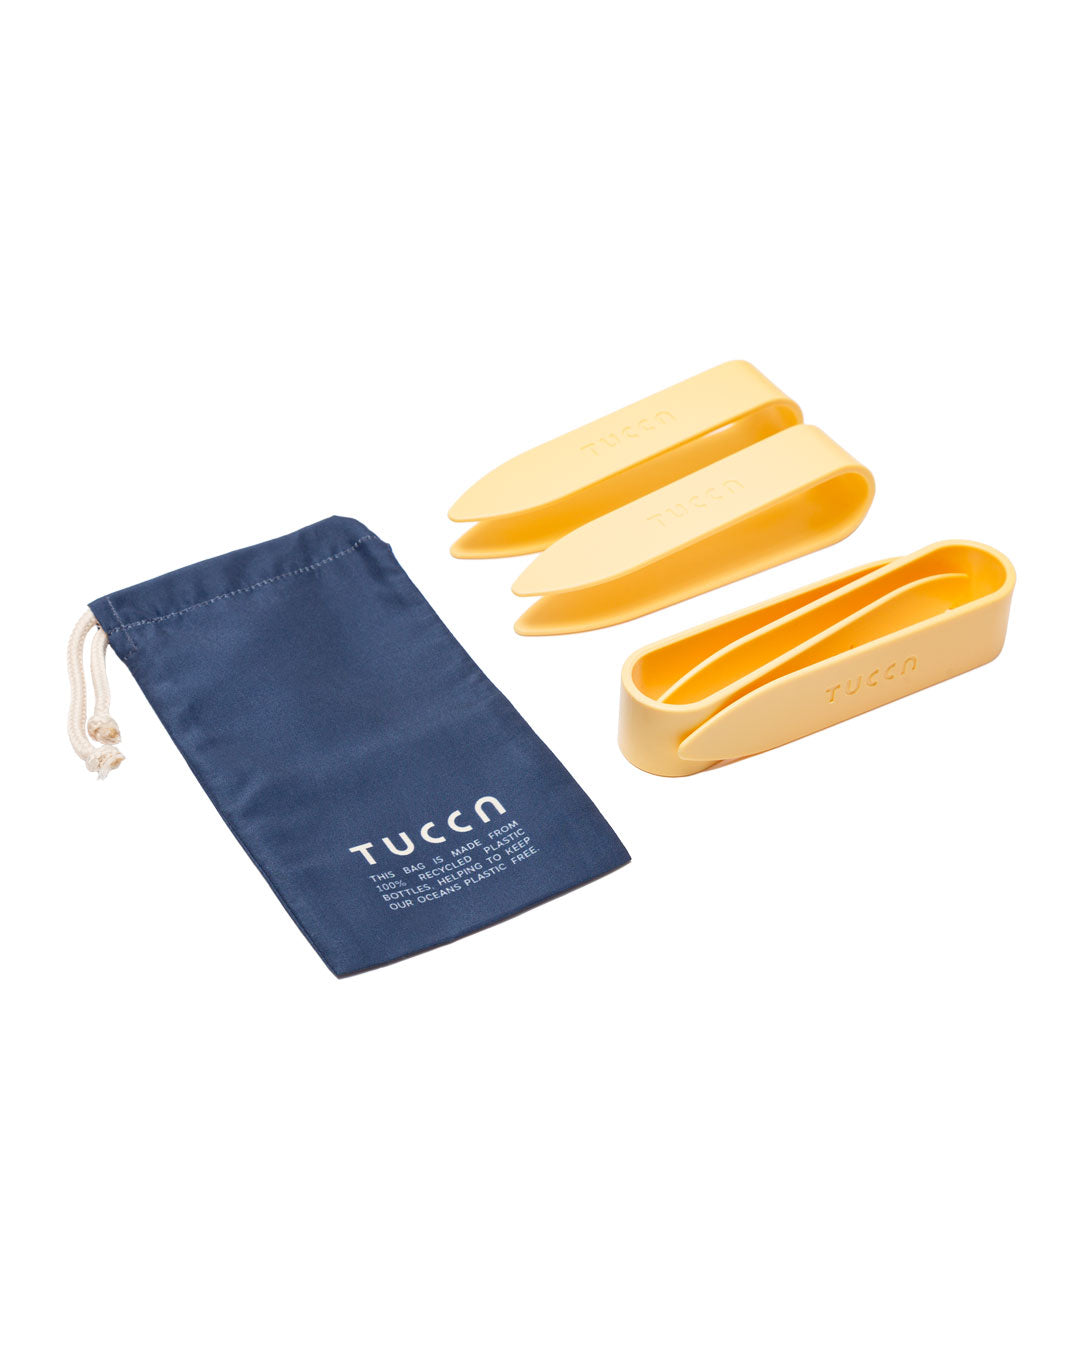 Tucca Towel pins